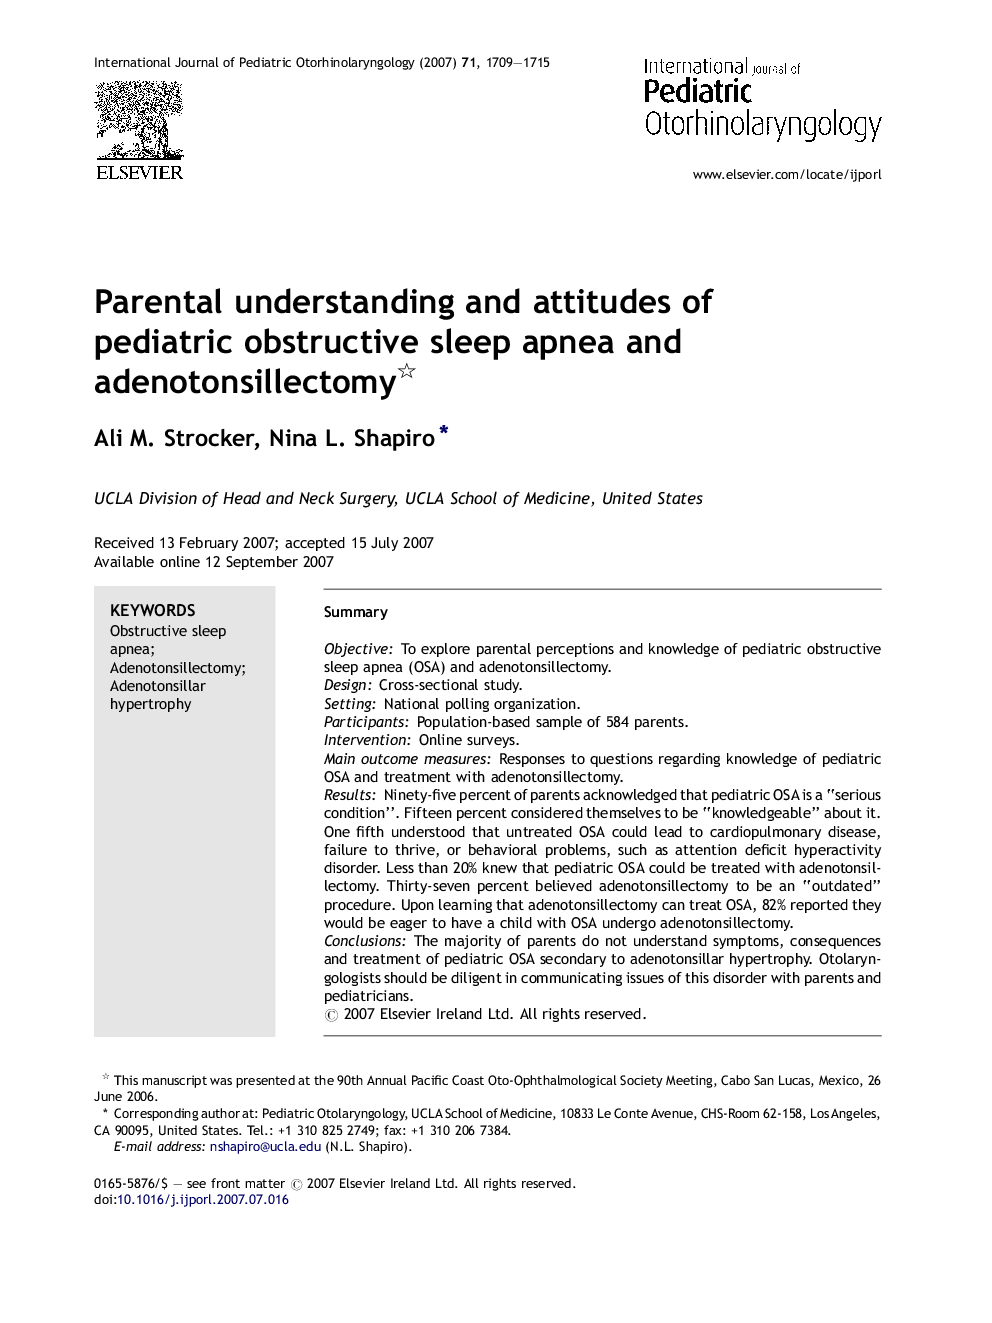 Parental understanding and attitudes of pediatric obstructive sleep apnea and adenotonsillectomy 